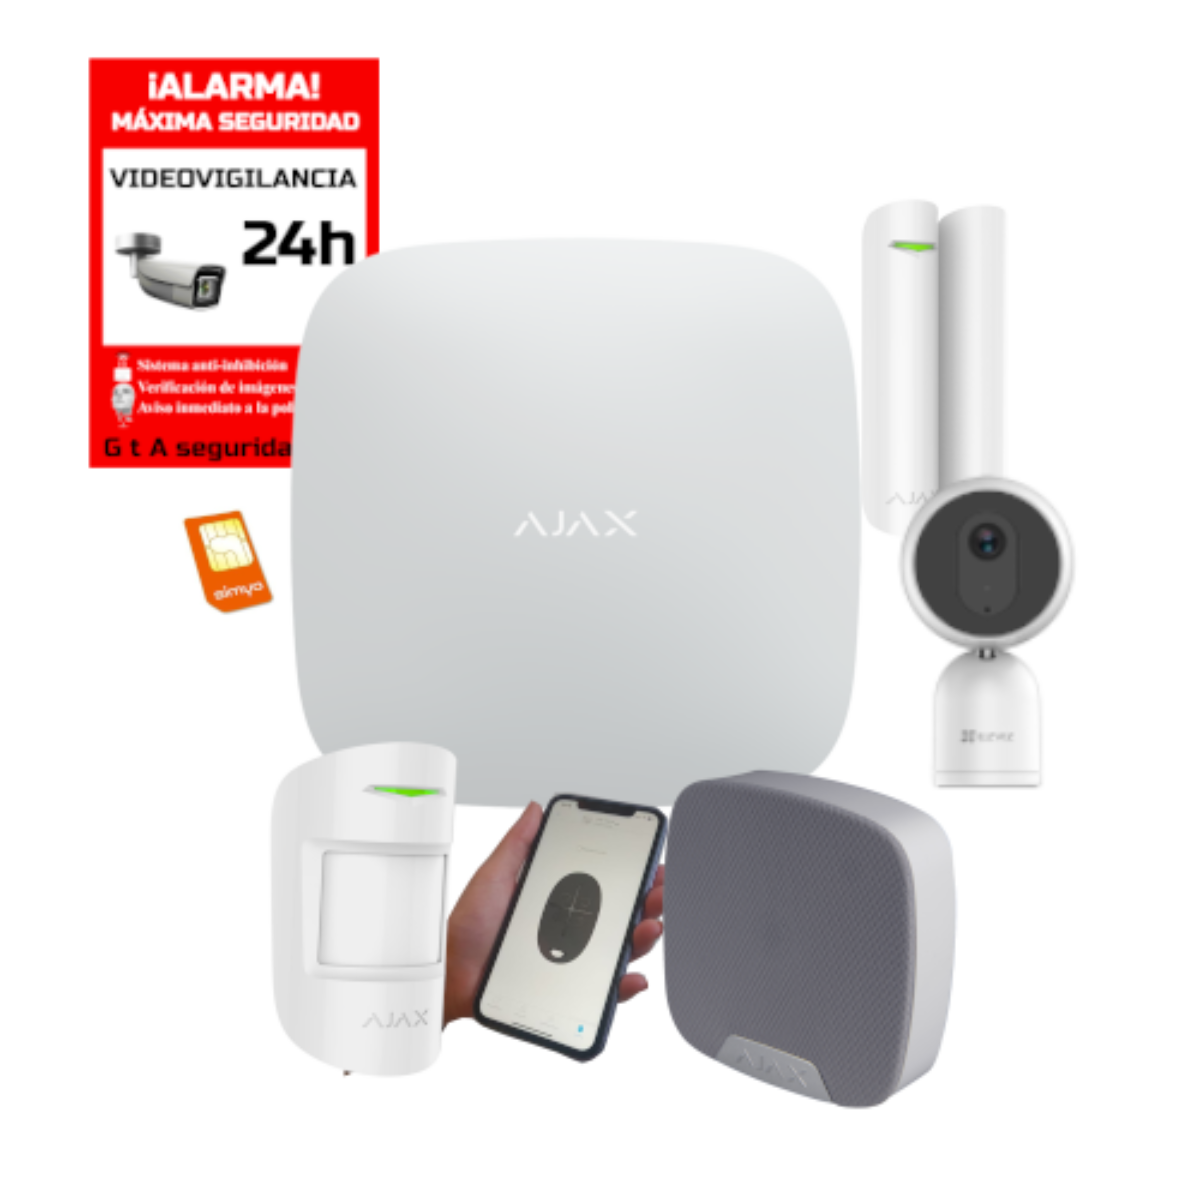 AJAX Kit PLUS-2W Alarma para el hogar, Blanco 